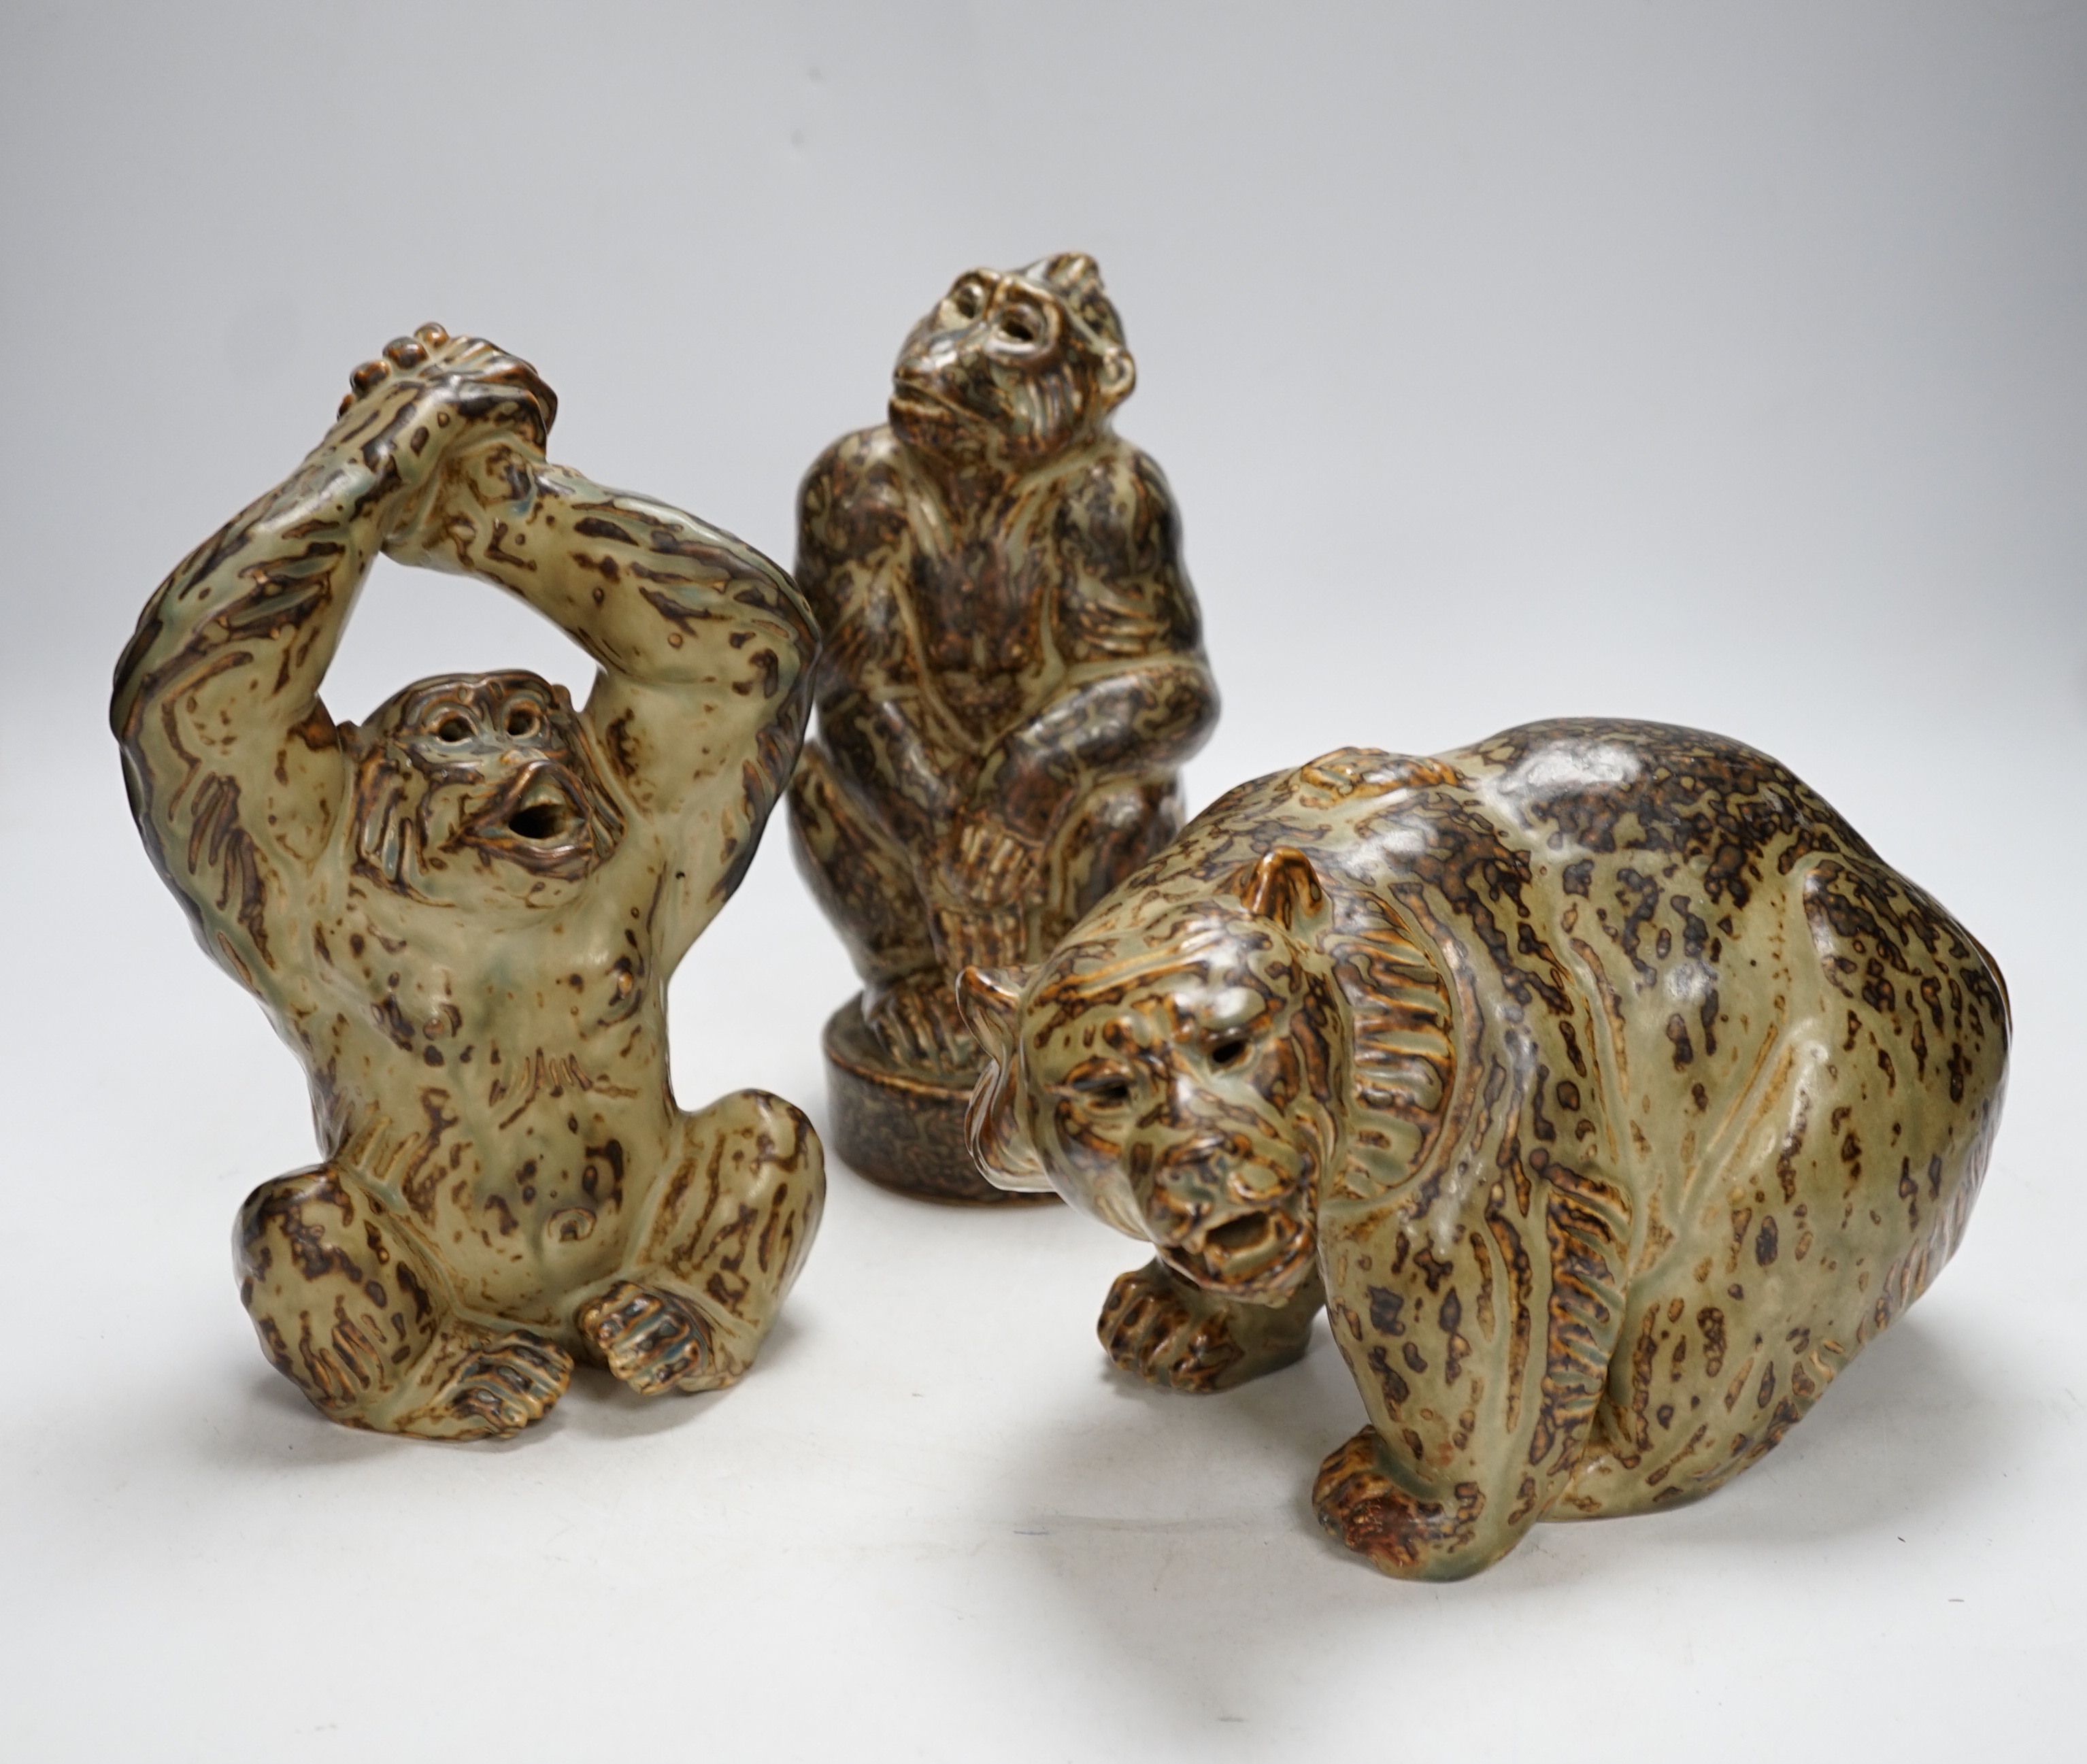 Three Royal Copenhagen, stoneware animals by Knud Kyhn; a monkey (21633), an ape (20227) and a bear (20140), tallest 21.5 cm